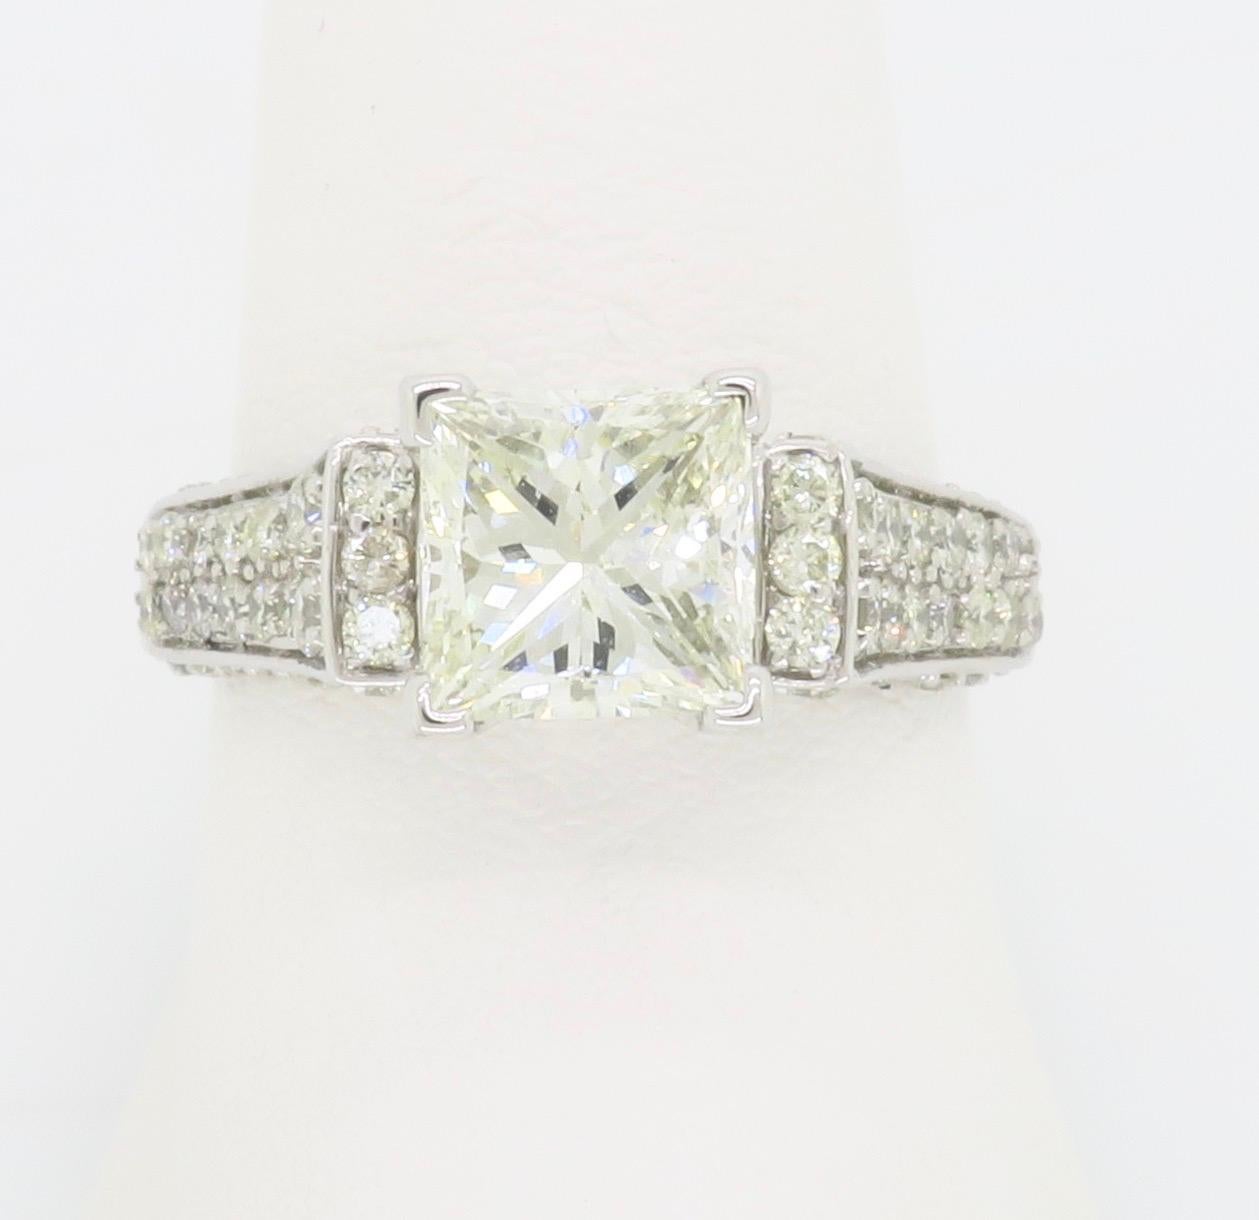 Certified 2.59ctw diamond engagement ring featuring a 1.74ct Princess Cut Diamond. 

Center Diamond Carat Weight: 1.74CT
Center Diamond Cut: Princess
Certification Number: EGL: 2752068030
Center Diamond Color: I
Center Diamond Clarity: VS2
Total